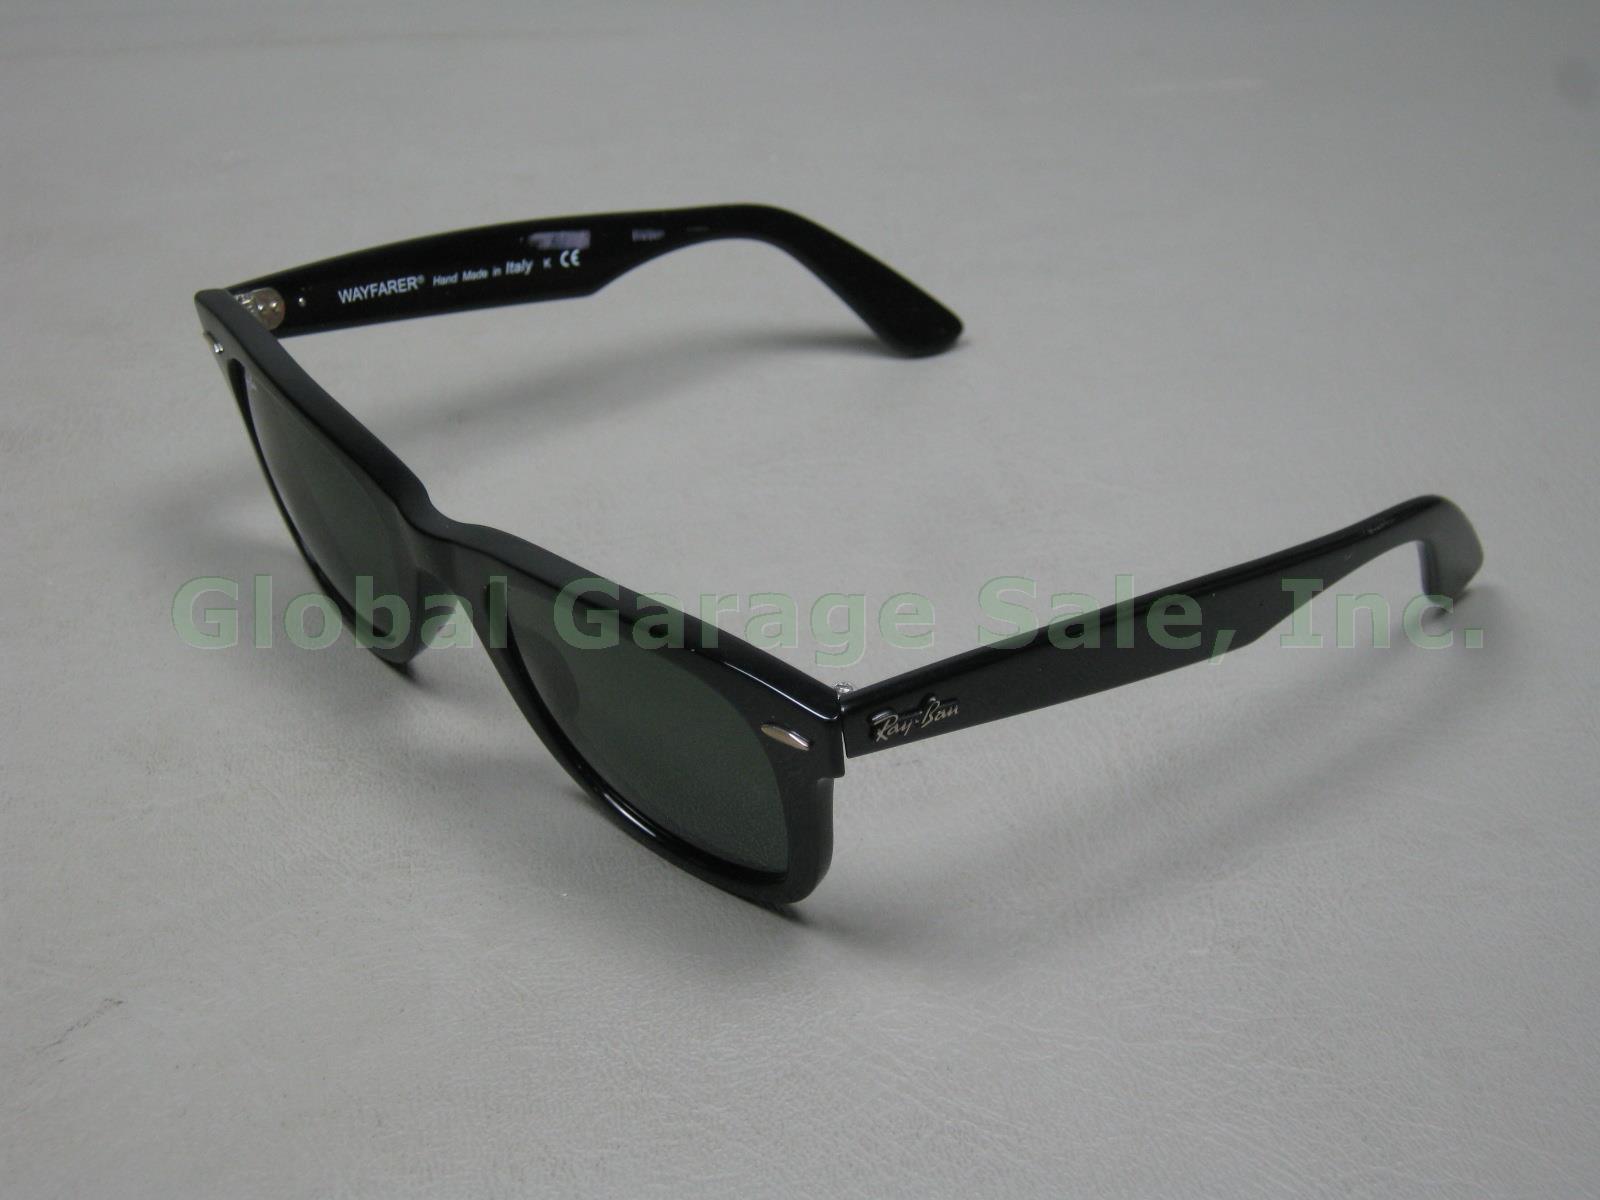 NOS Black Ray Ban Original Wayfarer Classics RB2140 Sunglasses + Case Bundle Lot 2